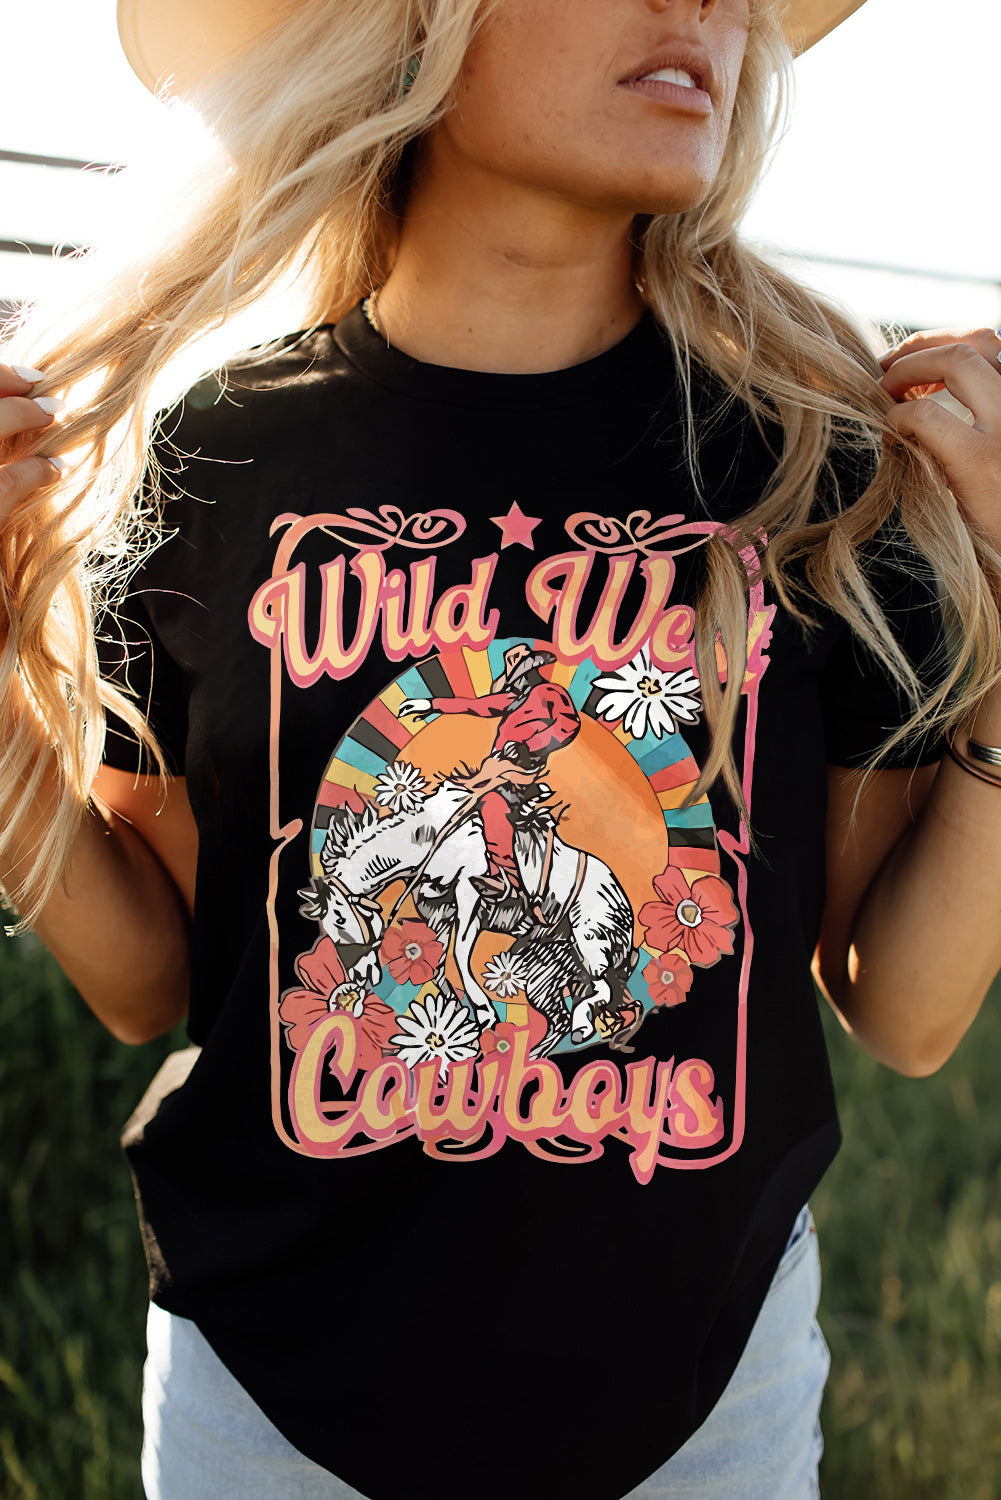 Camiseta gráfica WILD WEST COWBOYS